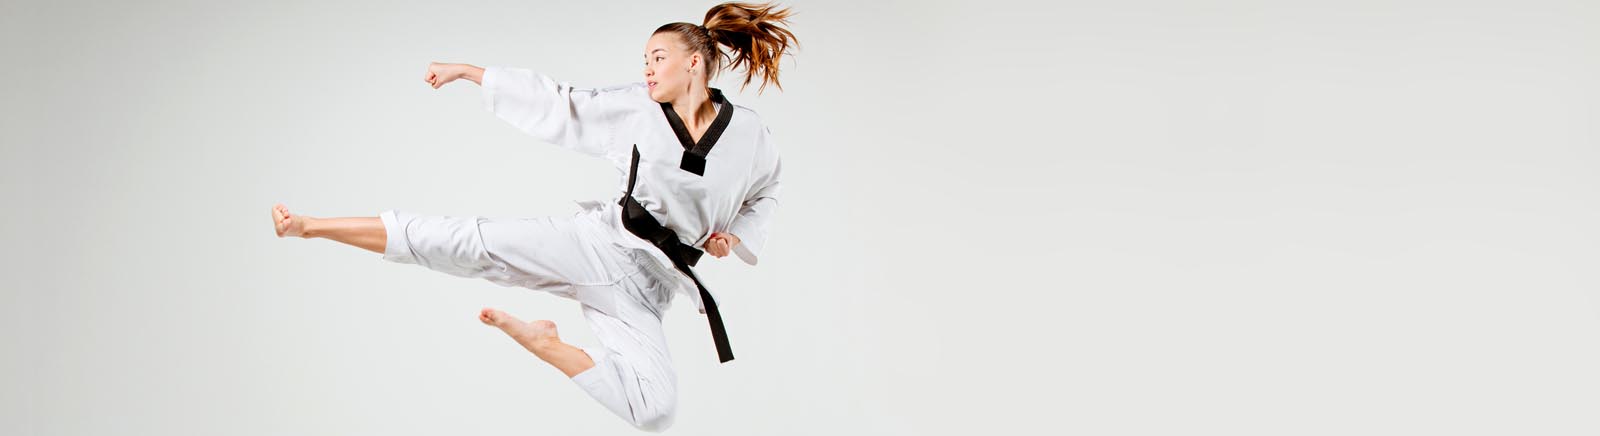 Karate post image